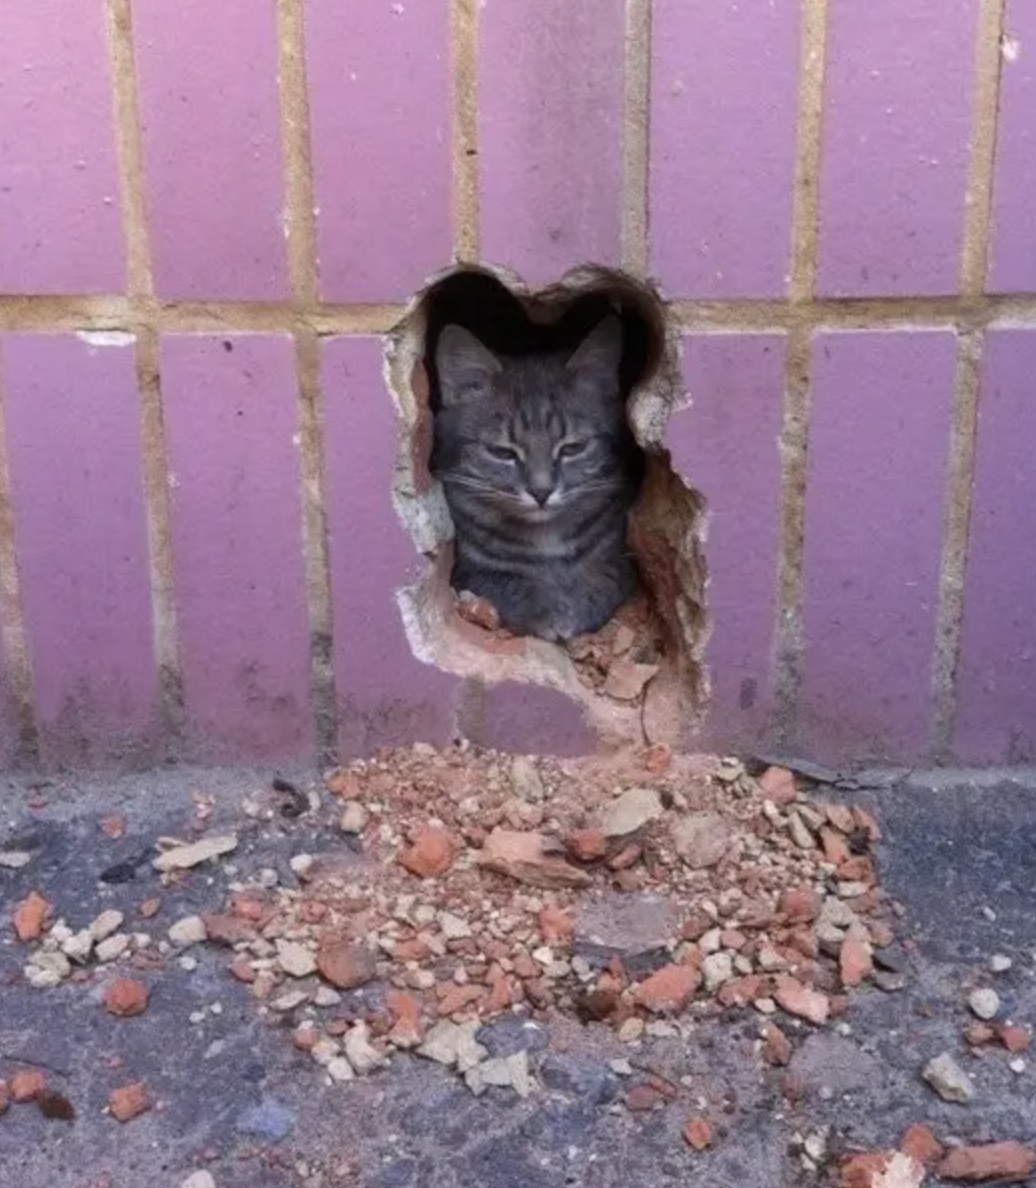 A cat peeking through a heart-shaped hole in a purple wall